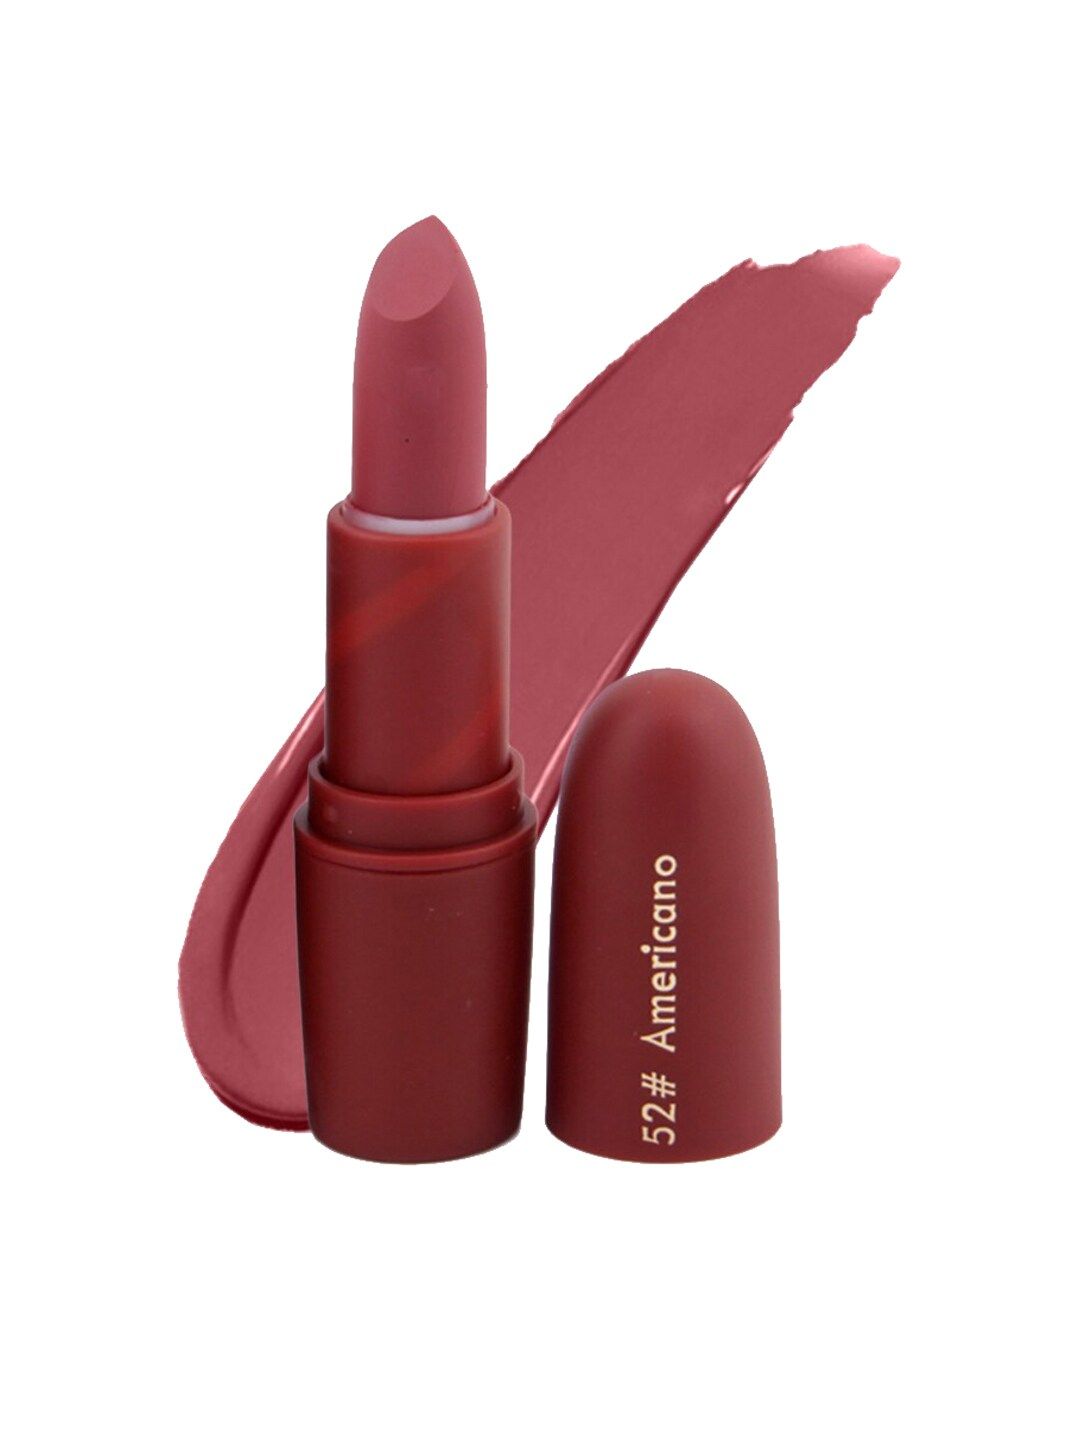 MISS ROSE Creamy Matte Bullet Lipstick - Shade 52 Americano Price in India